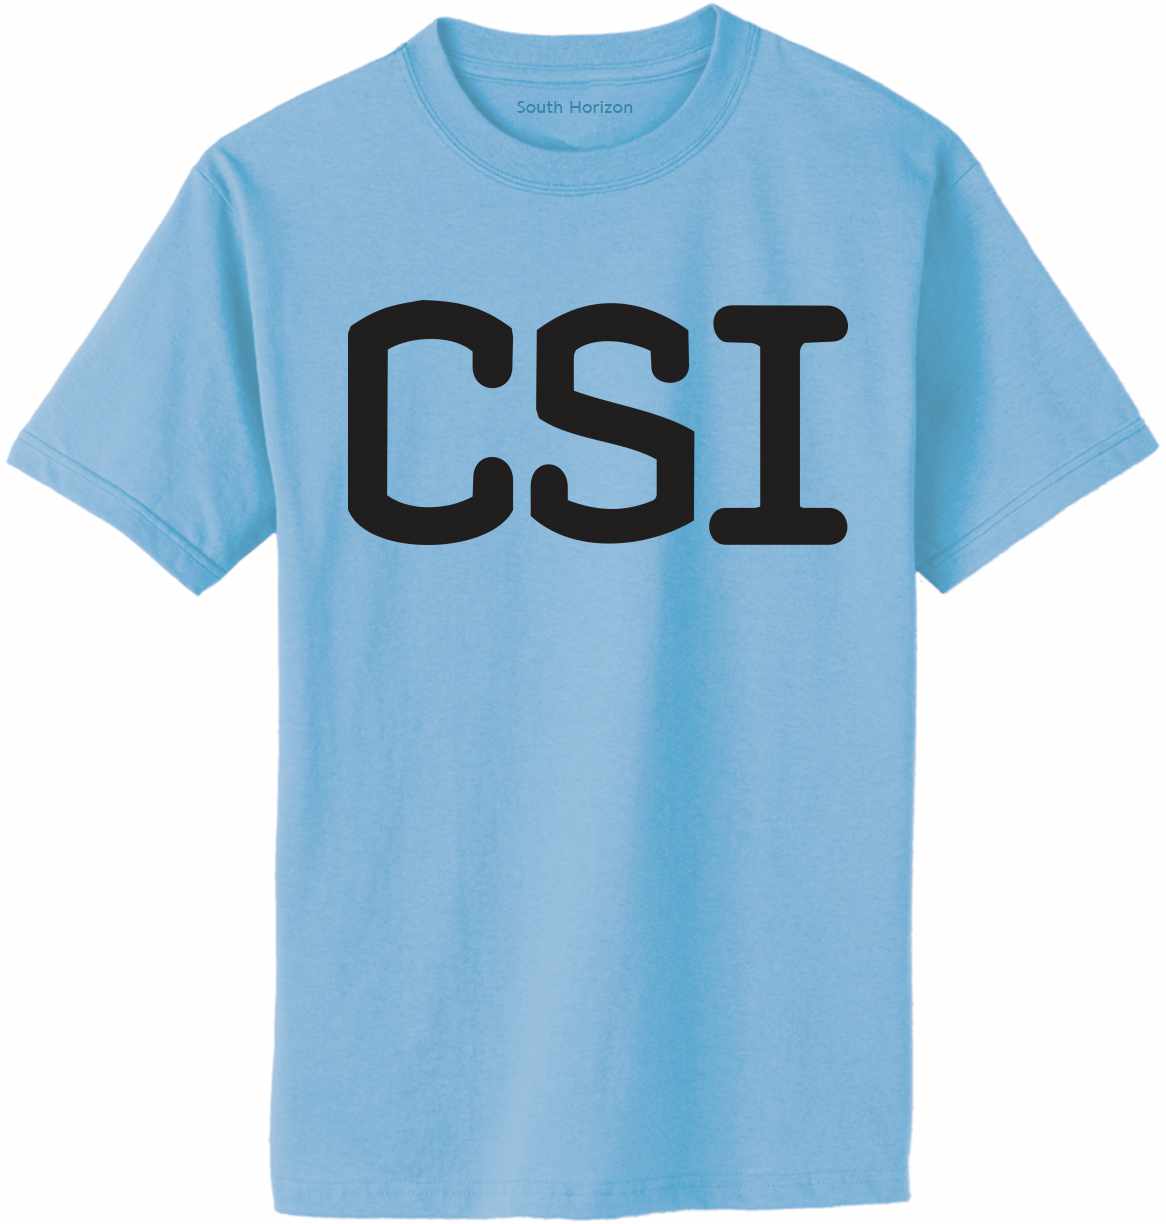 C S I Adult T-Shirt (#443-1)